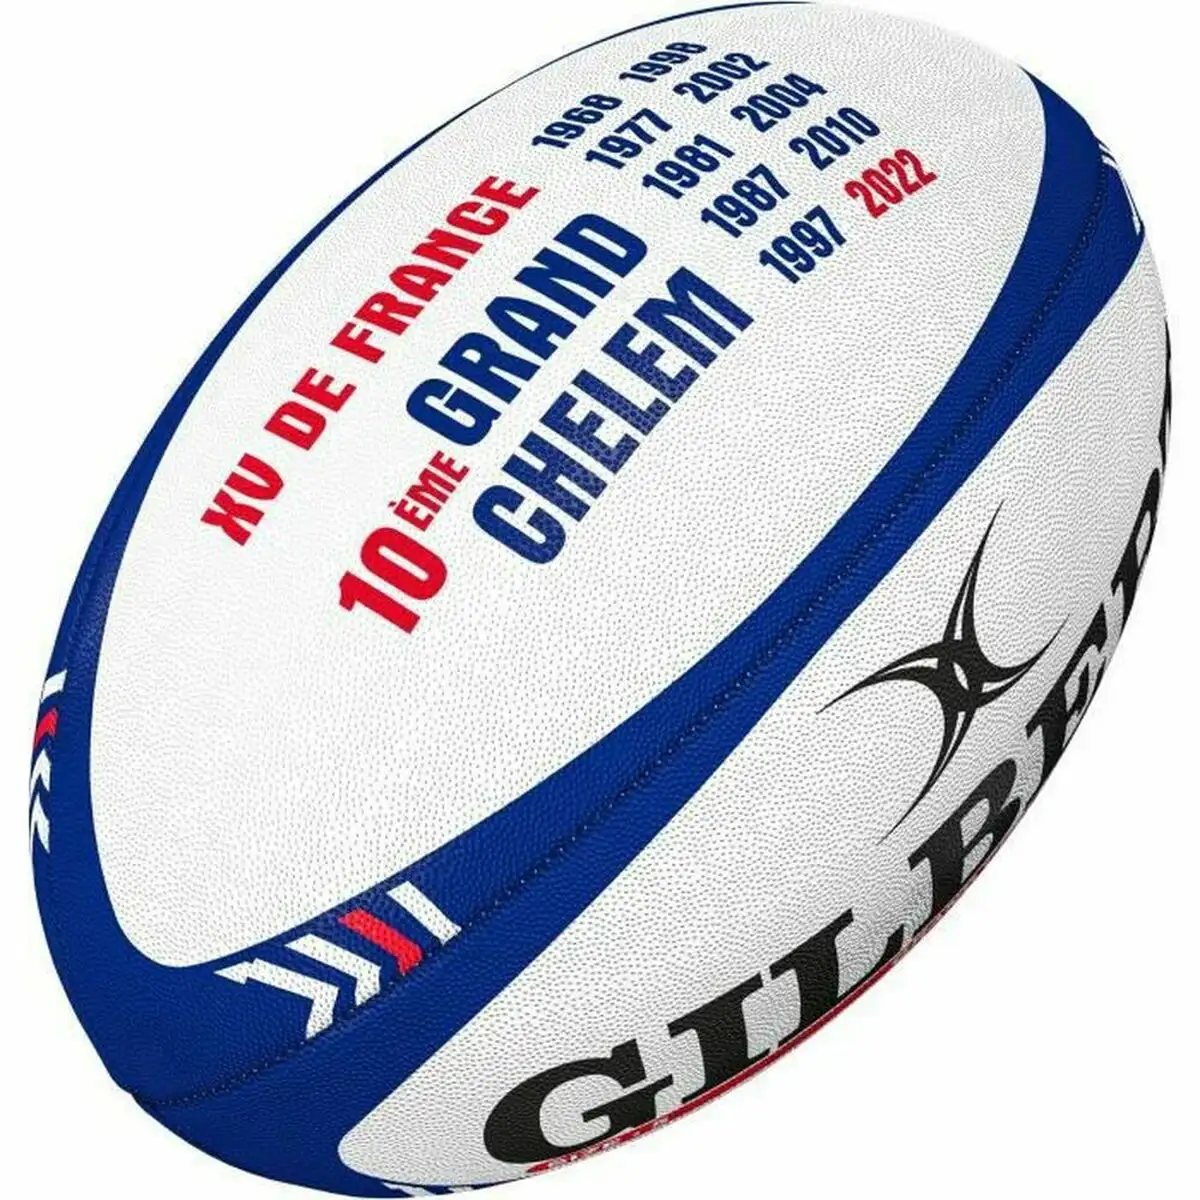 Ballon de rugby taille 5 - Gilbert Replica France blanc bleu rouge